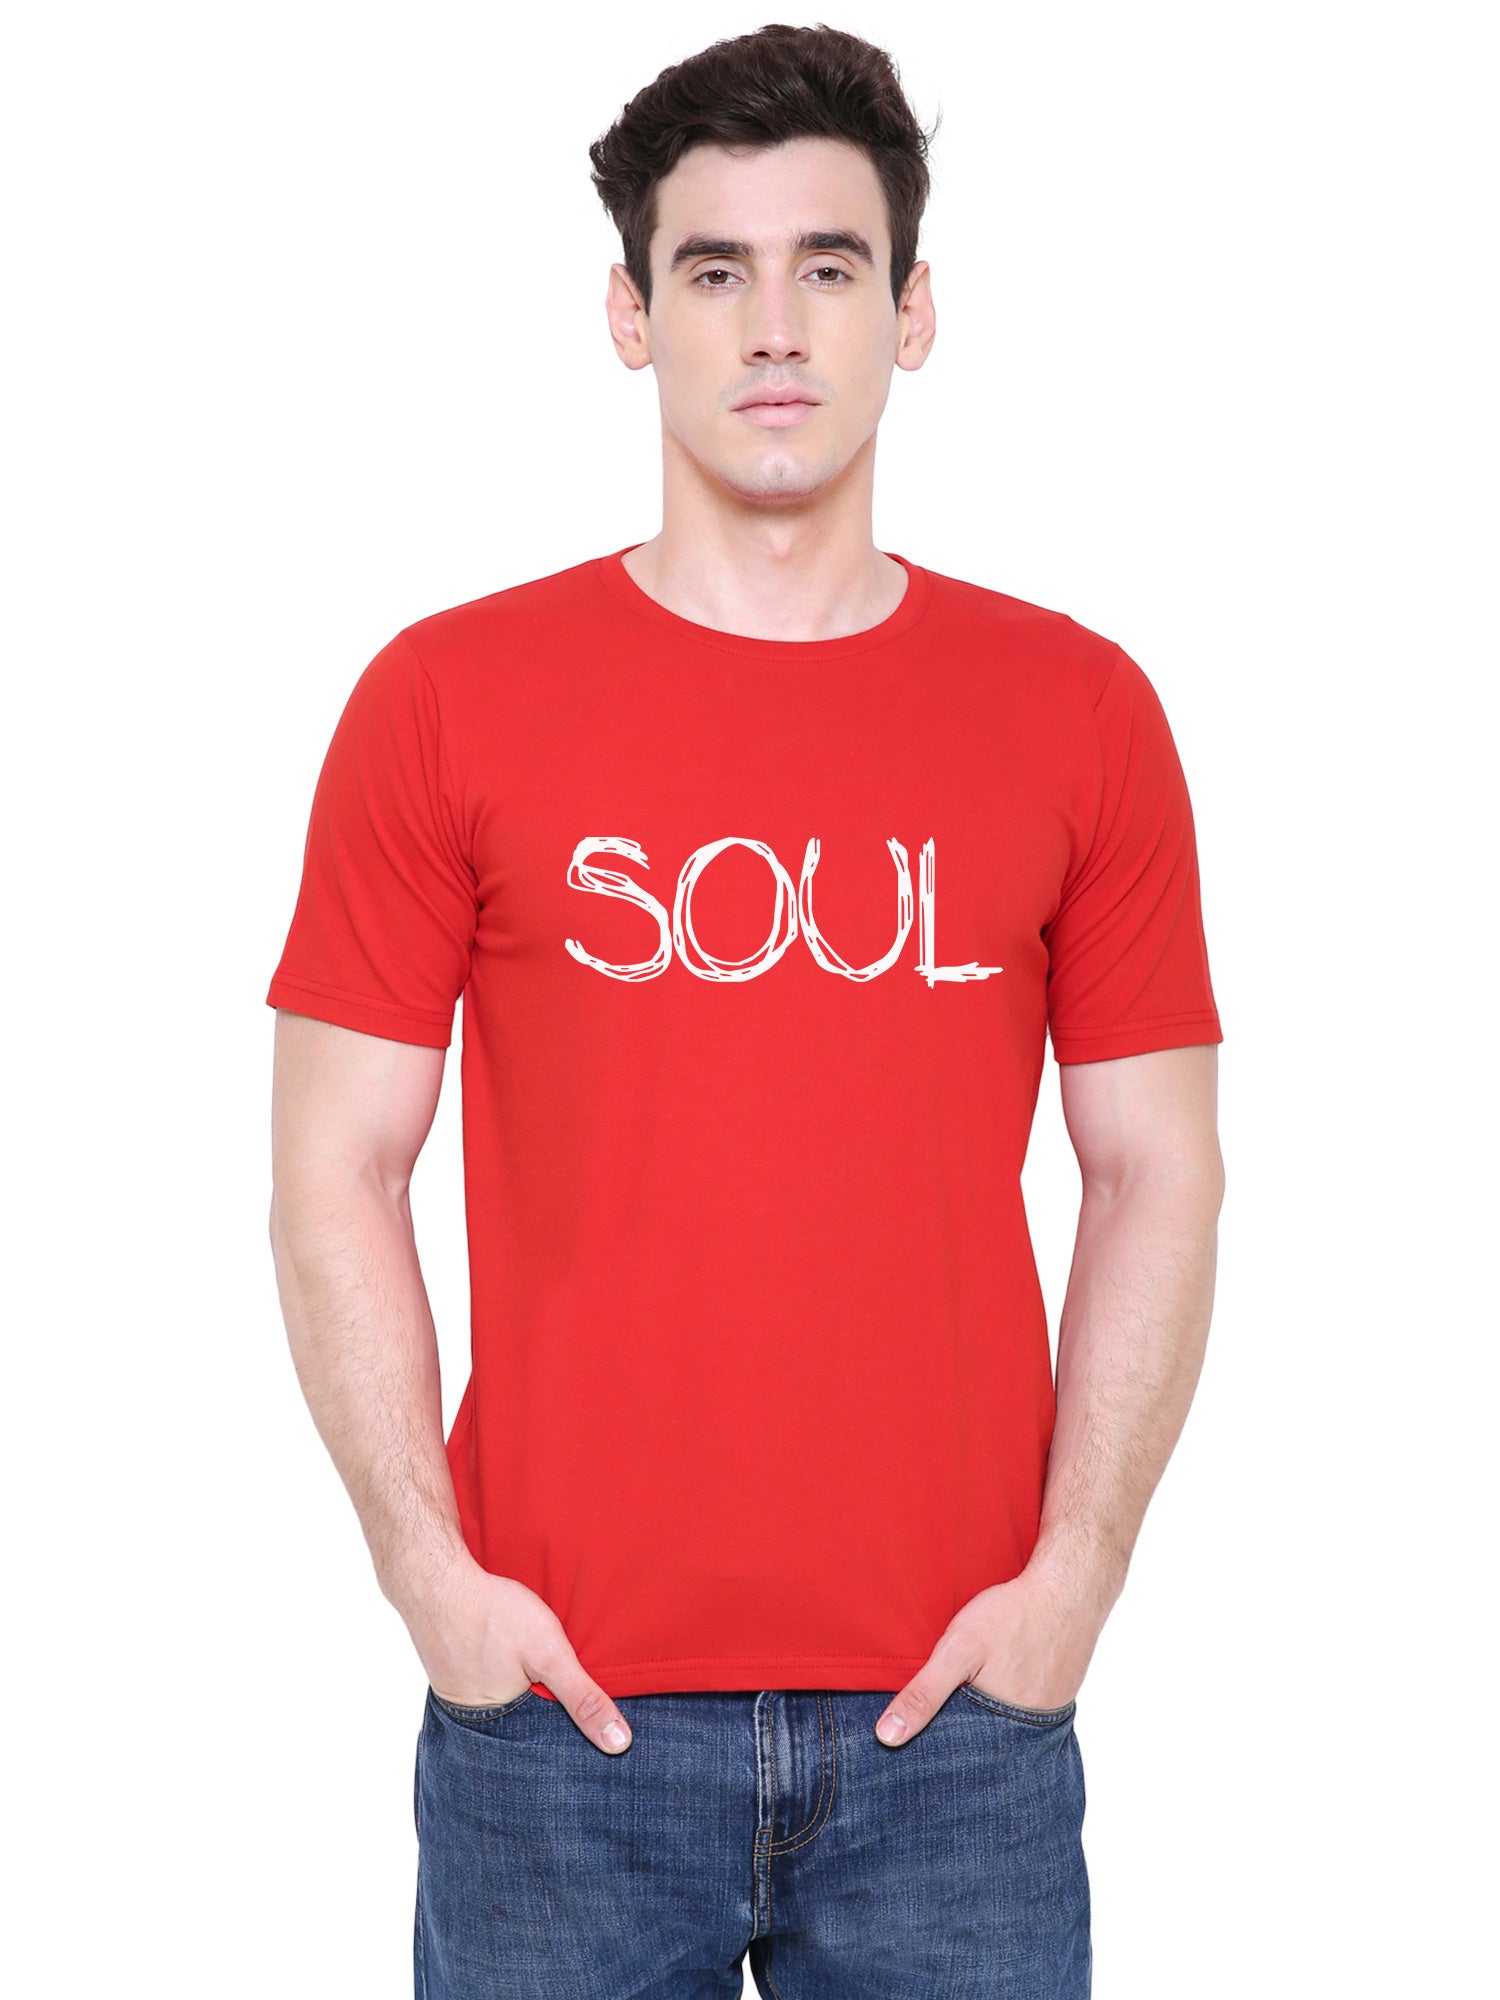 Soul Mate matching Couple T shirts- Red